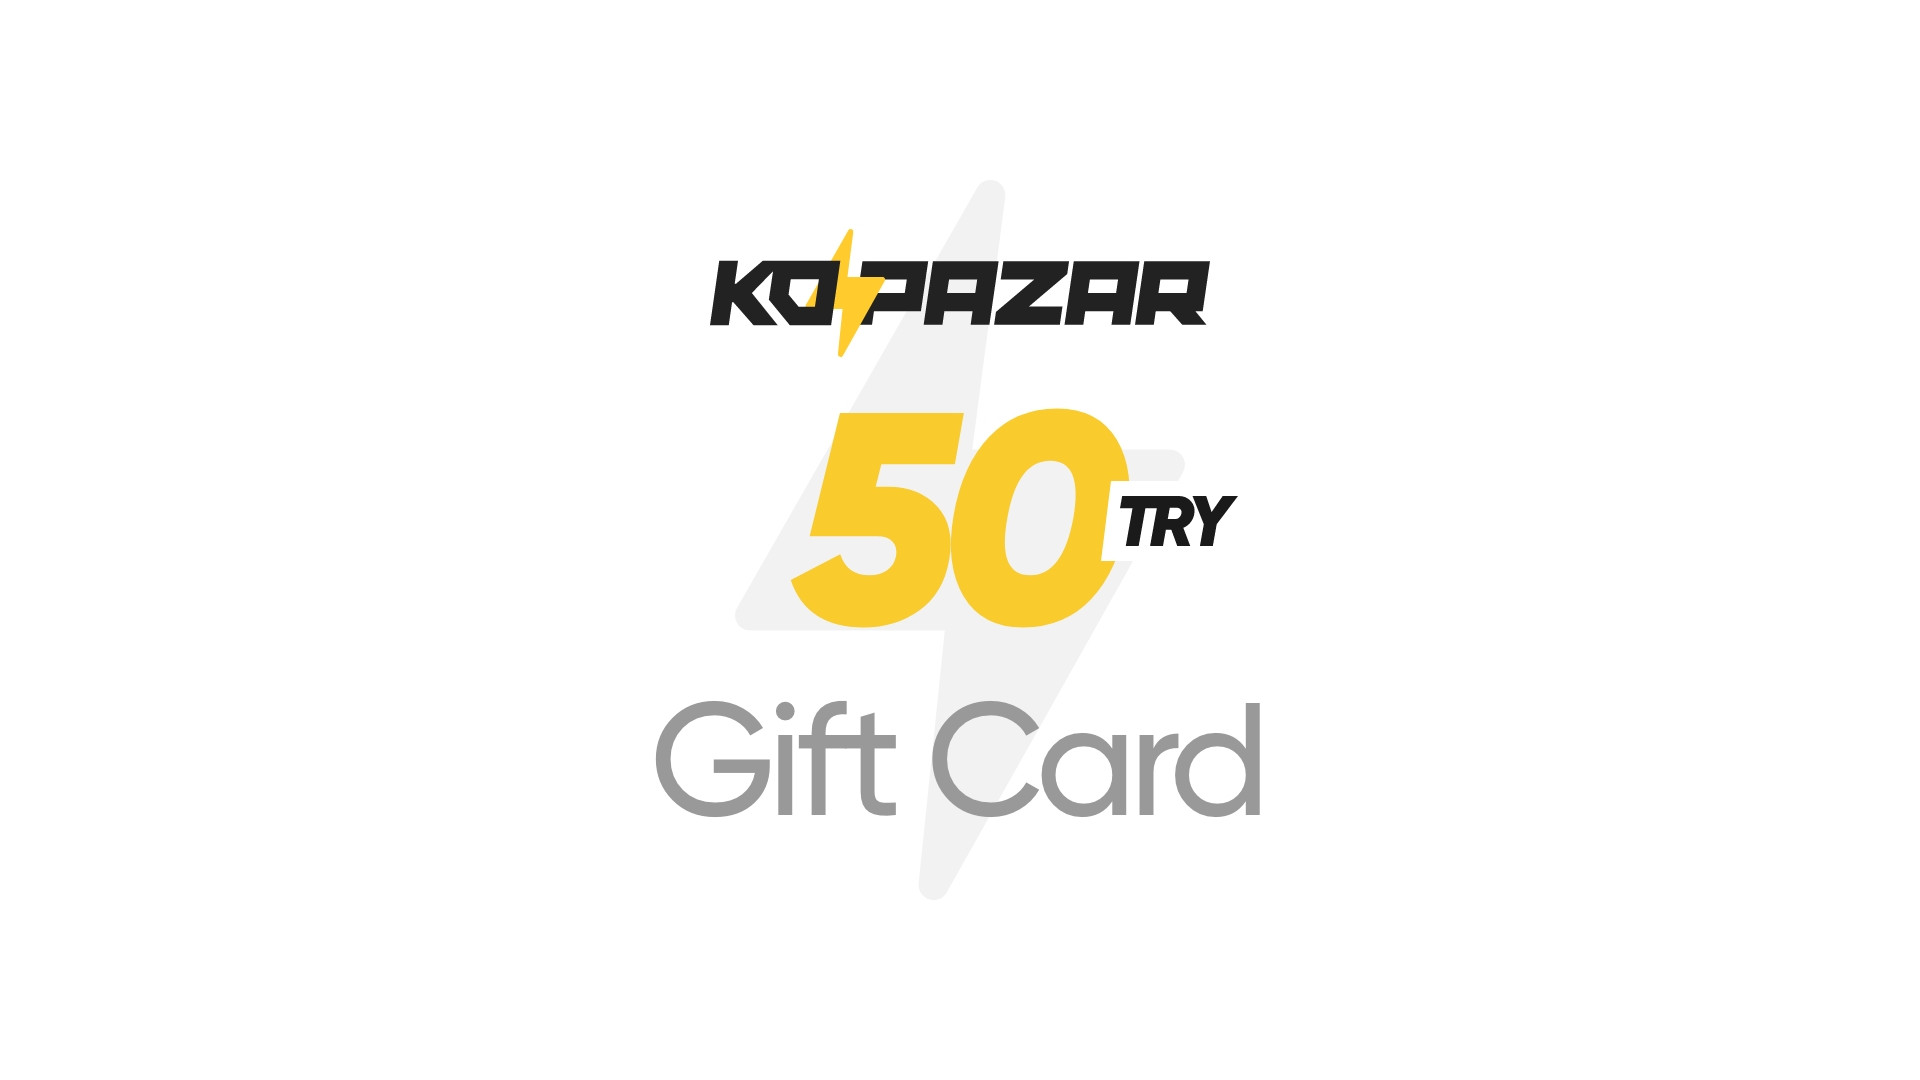 Kopazar 50 TRY Gift Card, 2.09 usd